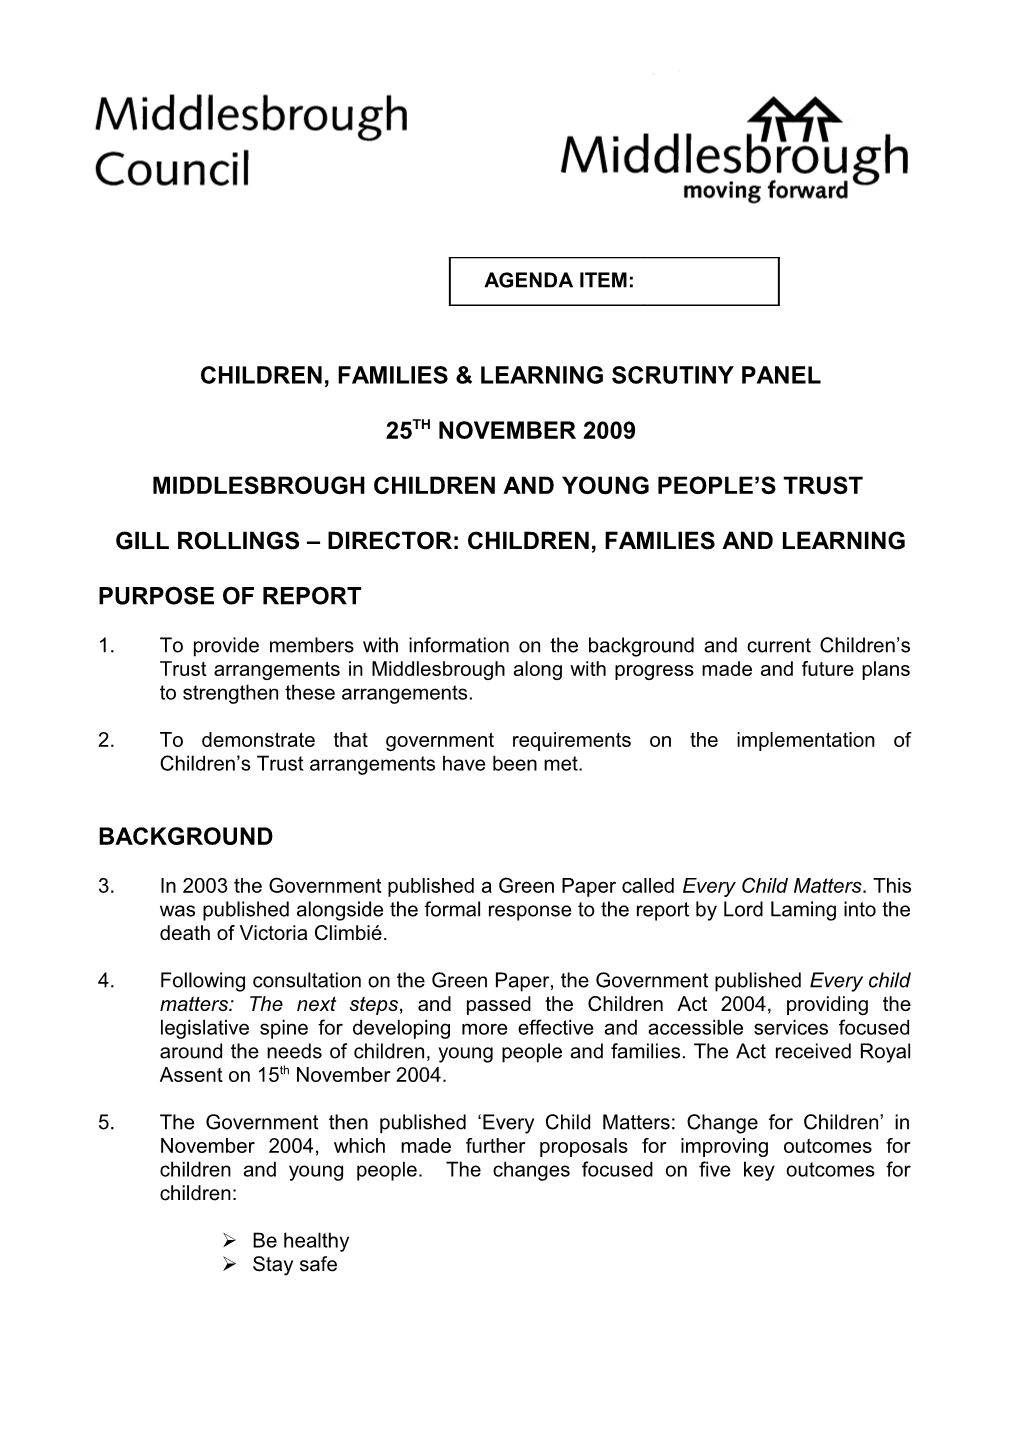 CHILDREN, Families & Learning Scrutiny Panel